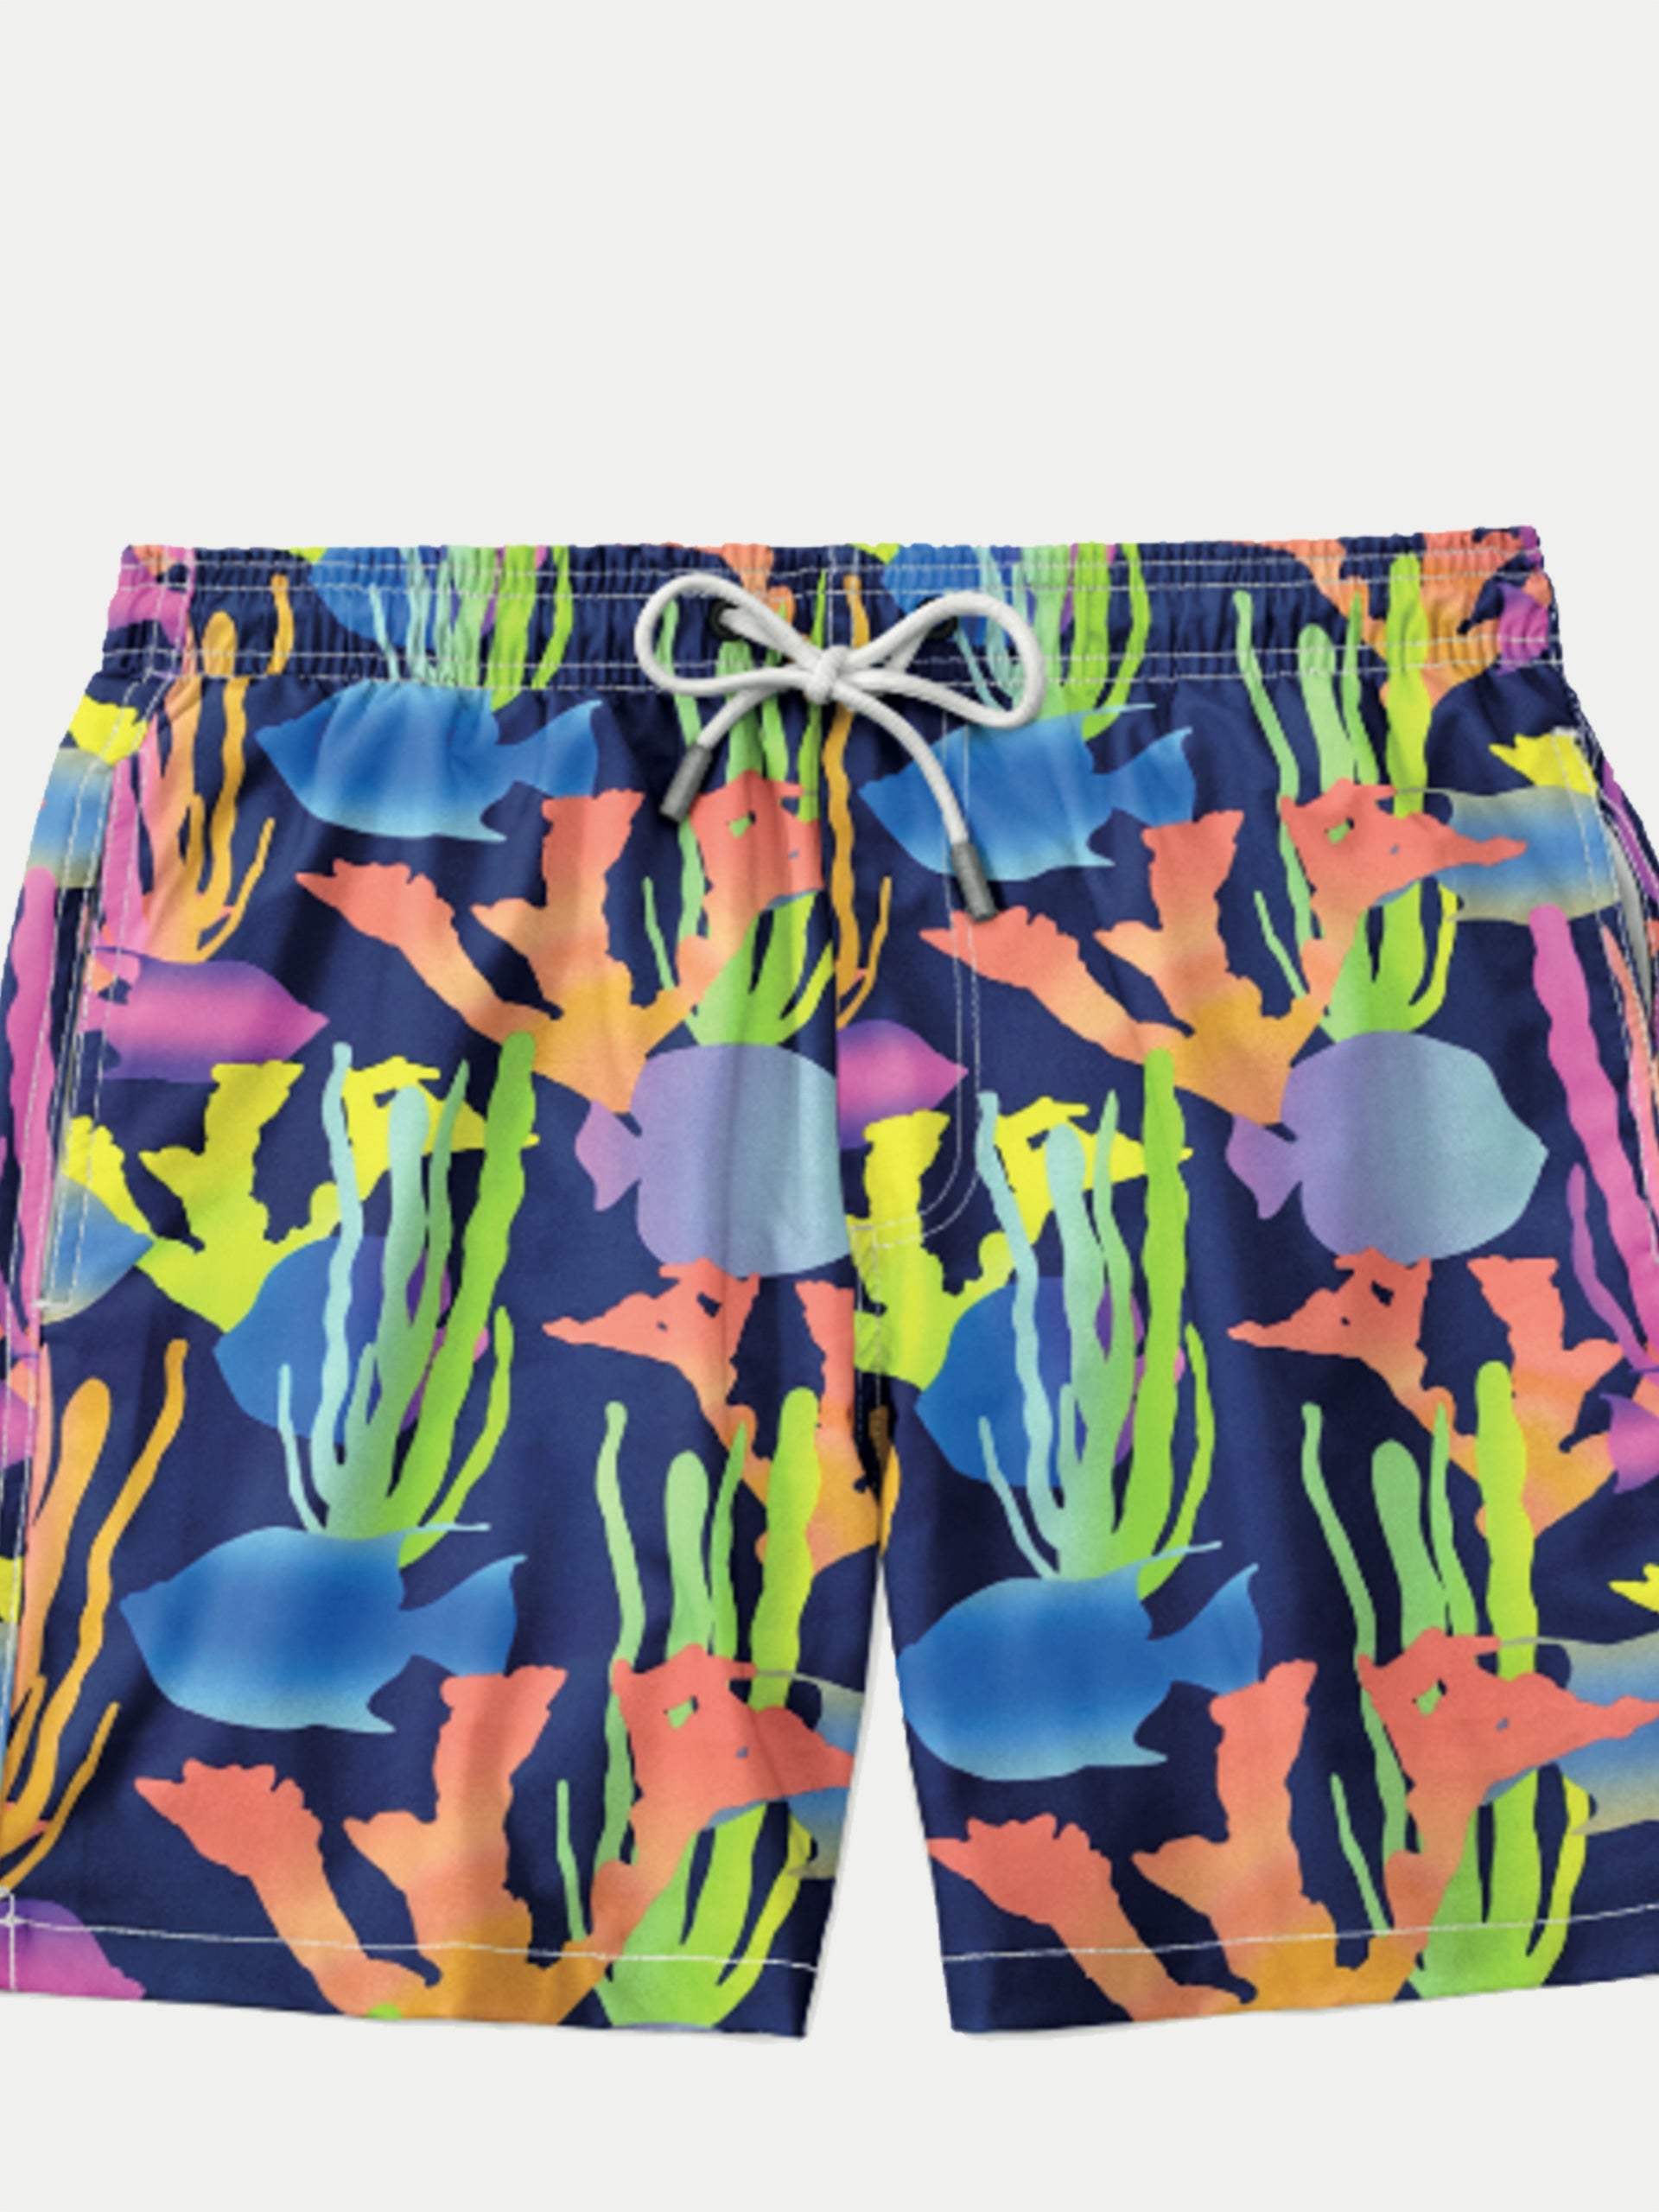 'Aquarium' Boys Swim Shorts by 98 Coast Av.